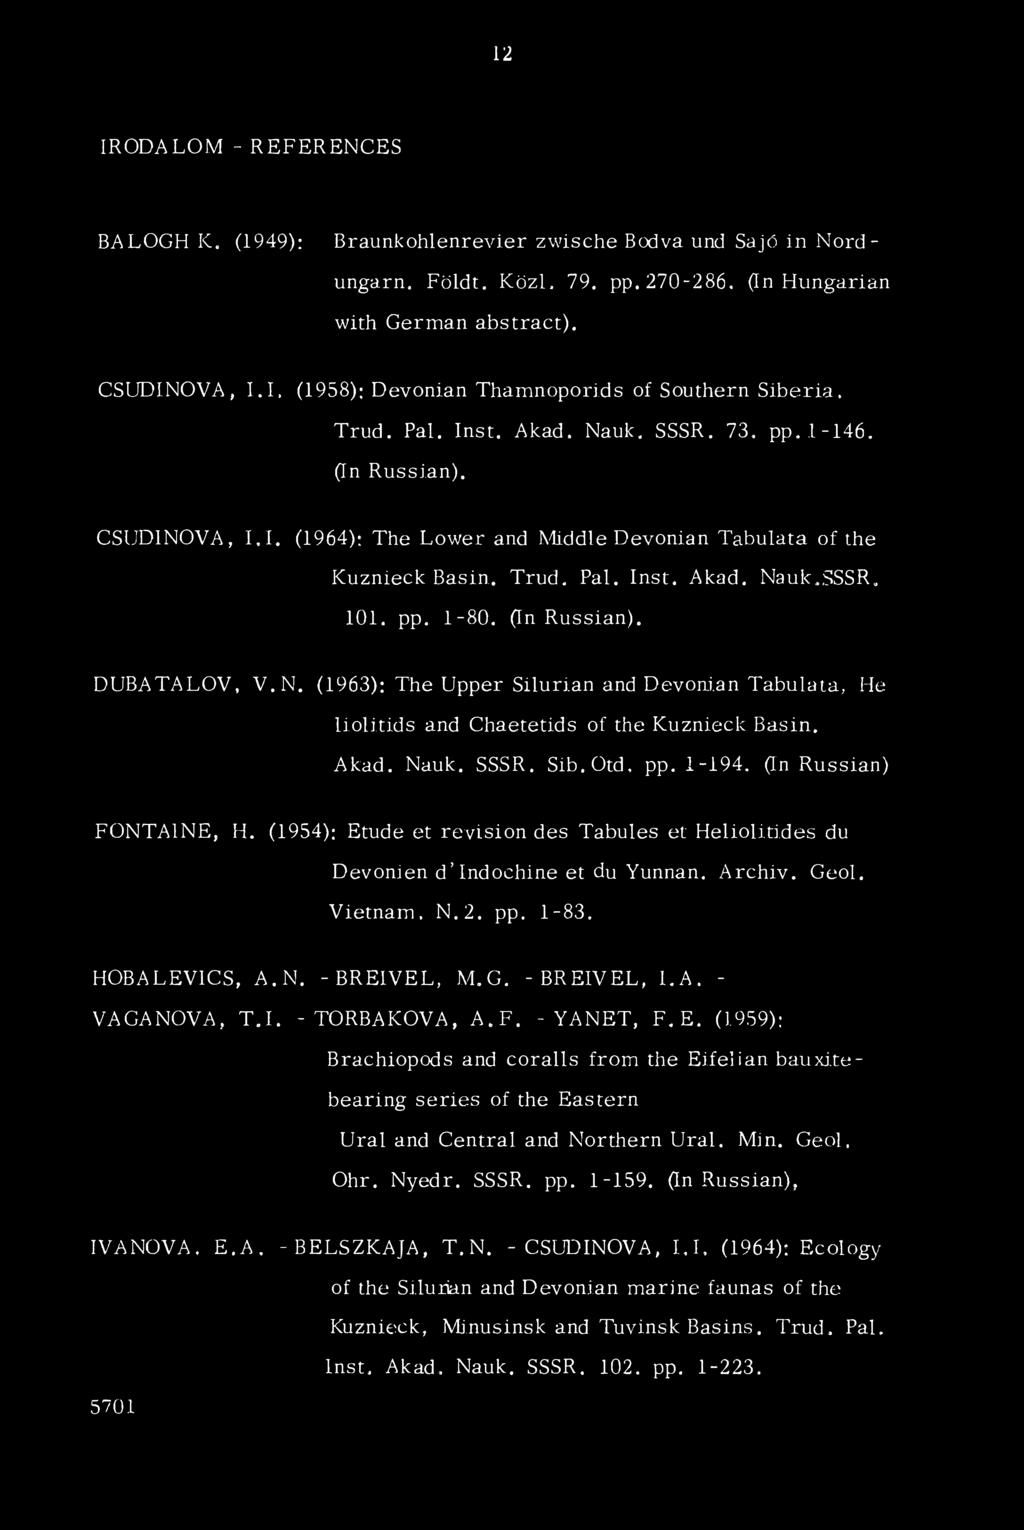 (In Russian). DUBATALOV, V.N. (1963): The Upper Silurian and Devonian Tabulata, He liolitids and Chaetetids of the Kuznieck Basin. Akad. Nauk. SSSR, Sib.Otd, pp. 1-194. (In Russian) FONTAINE, H.